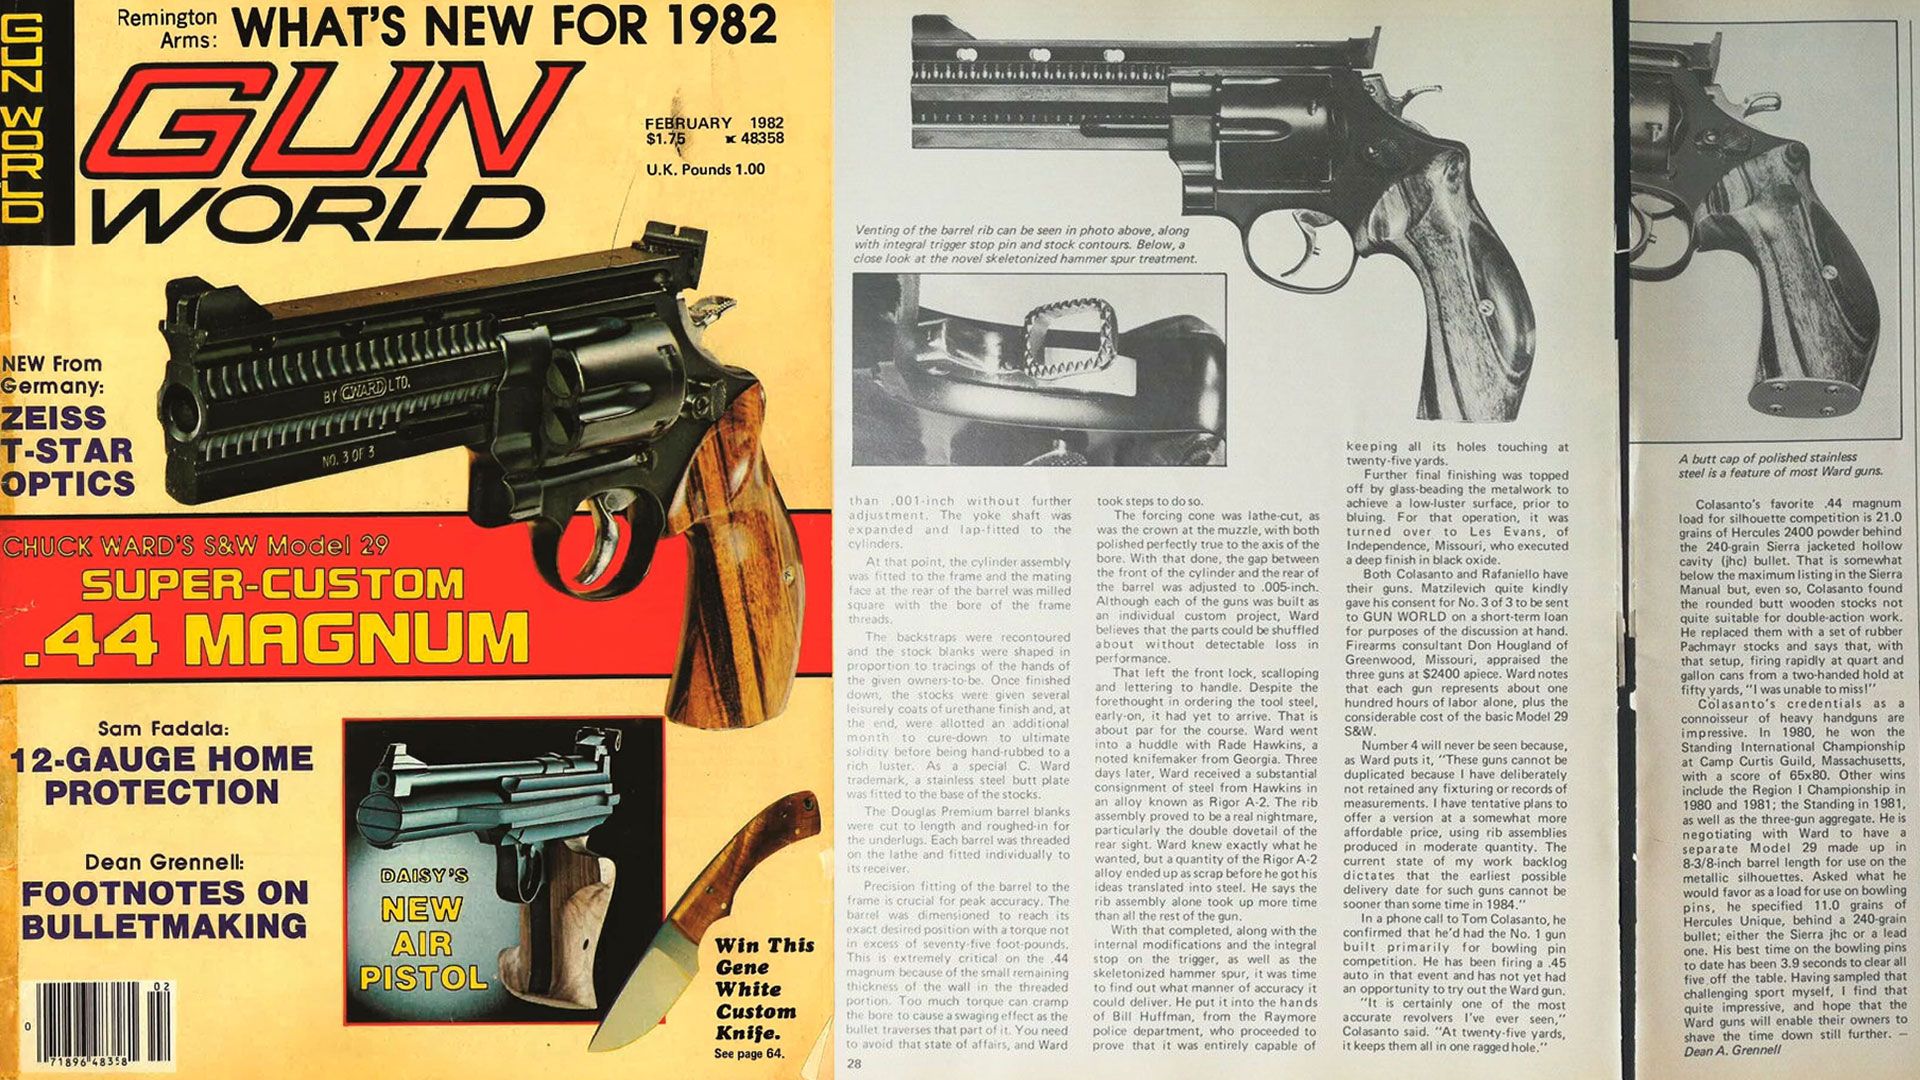 Gun-World-Magazine-Feb-1982-Chuck-Ward-S-W-Model-29-Super-Custom-.44-Magnum-Revolver